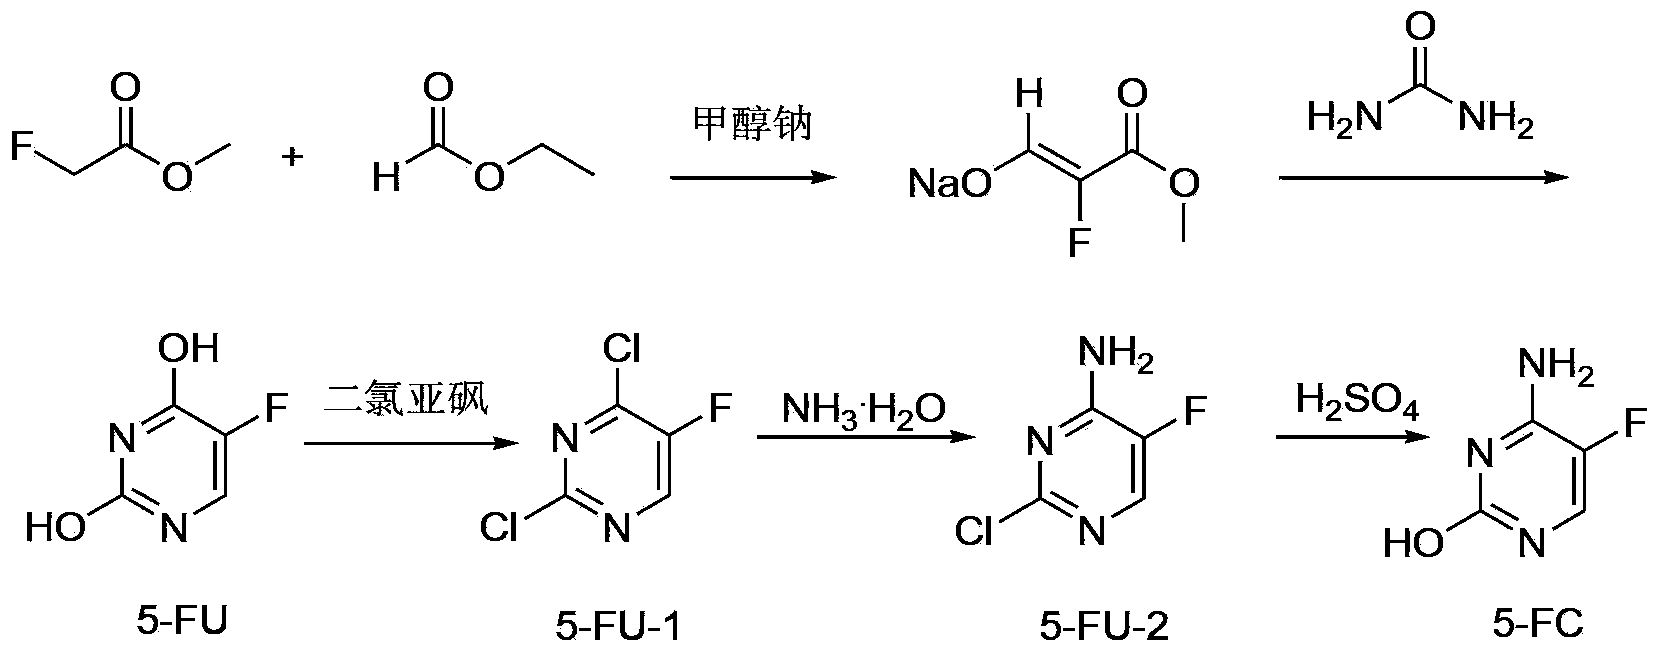 5-fluorocytosine preparation method